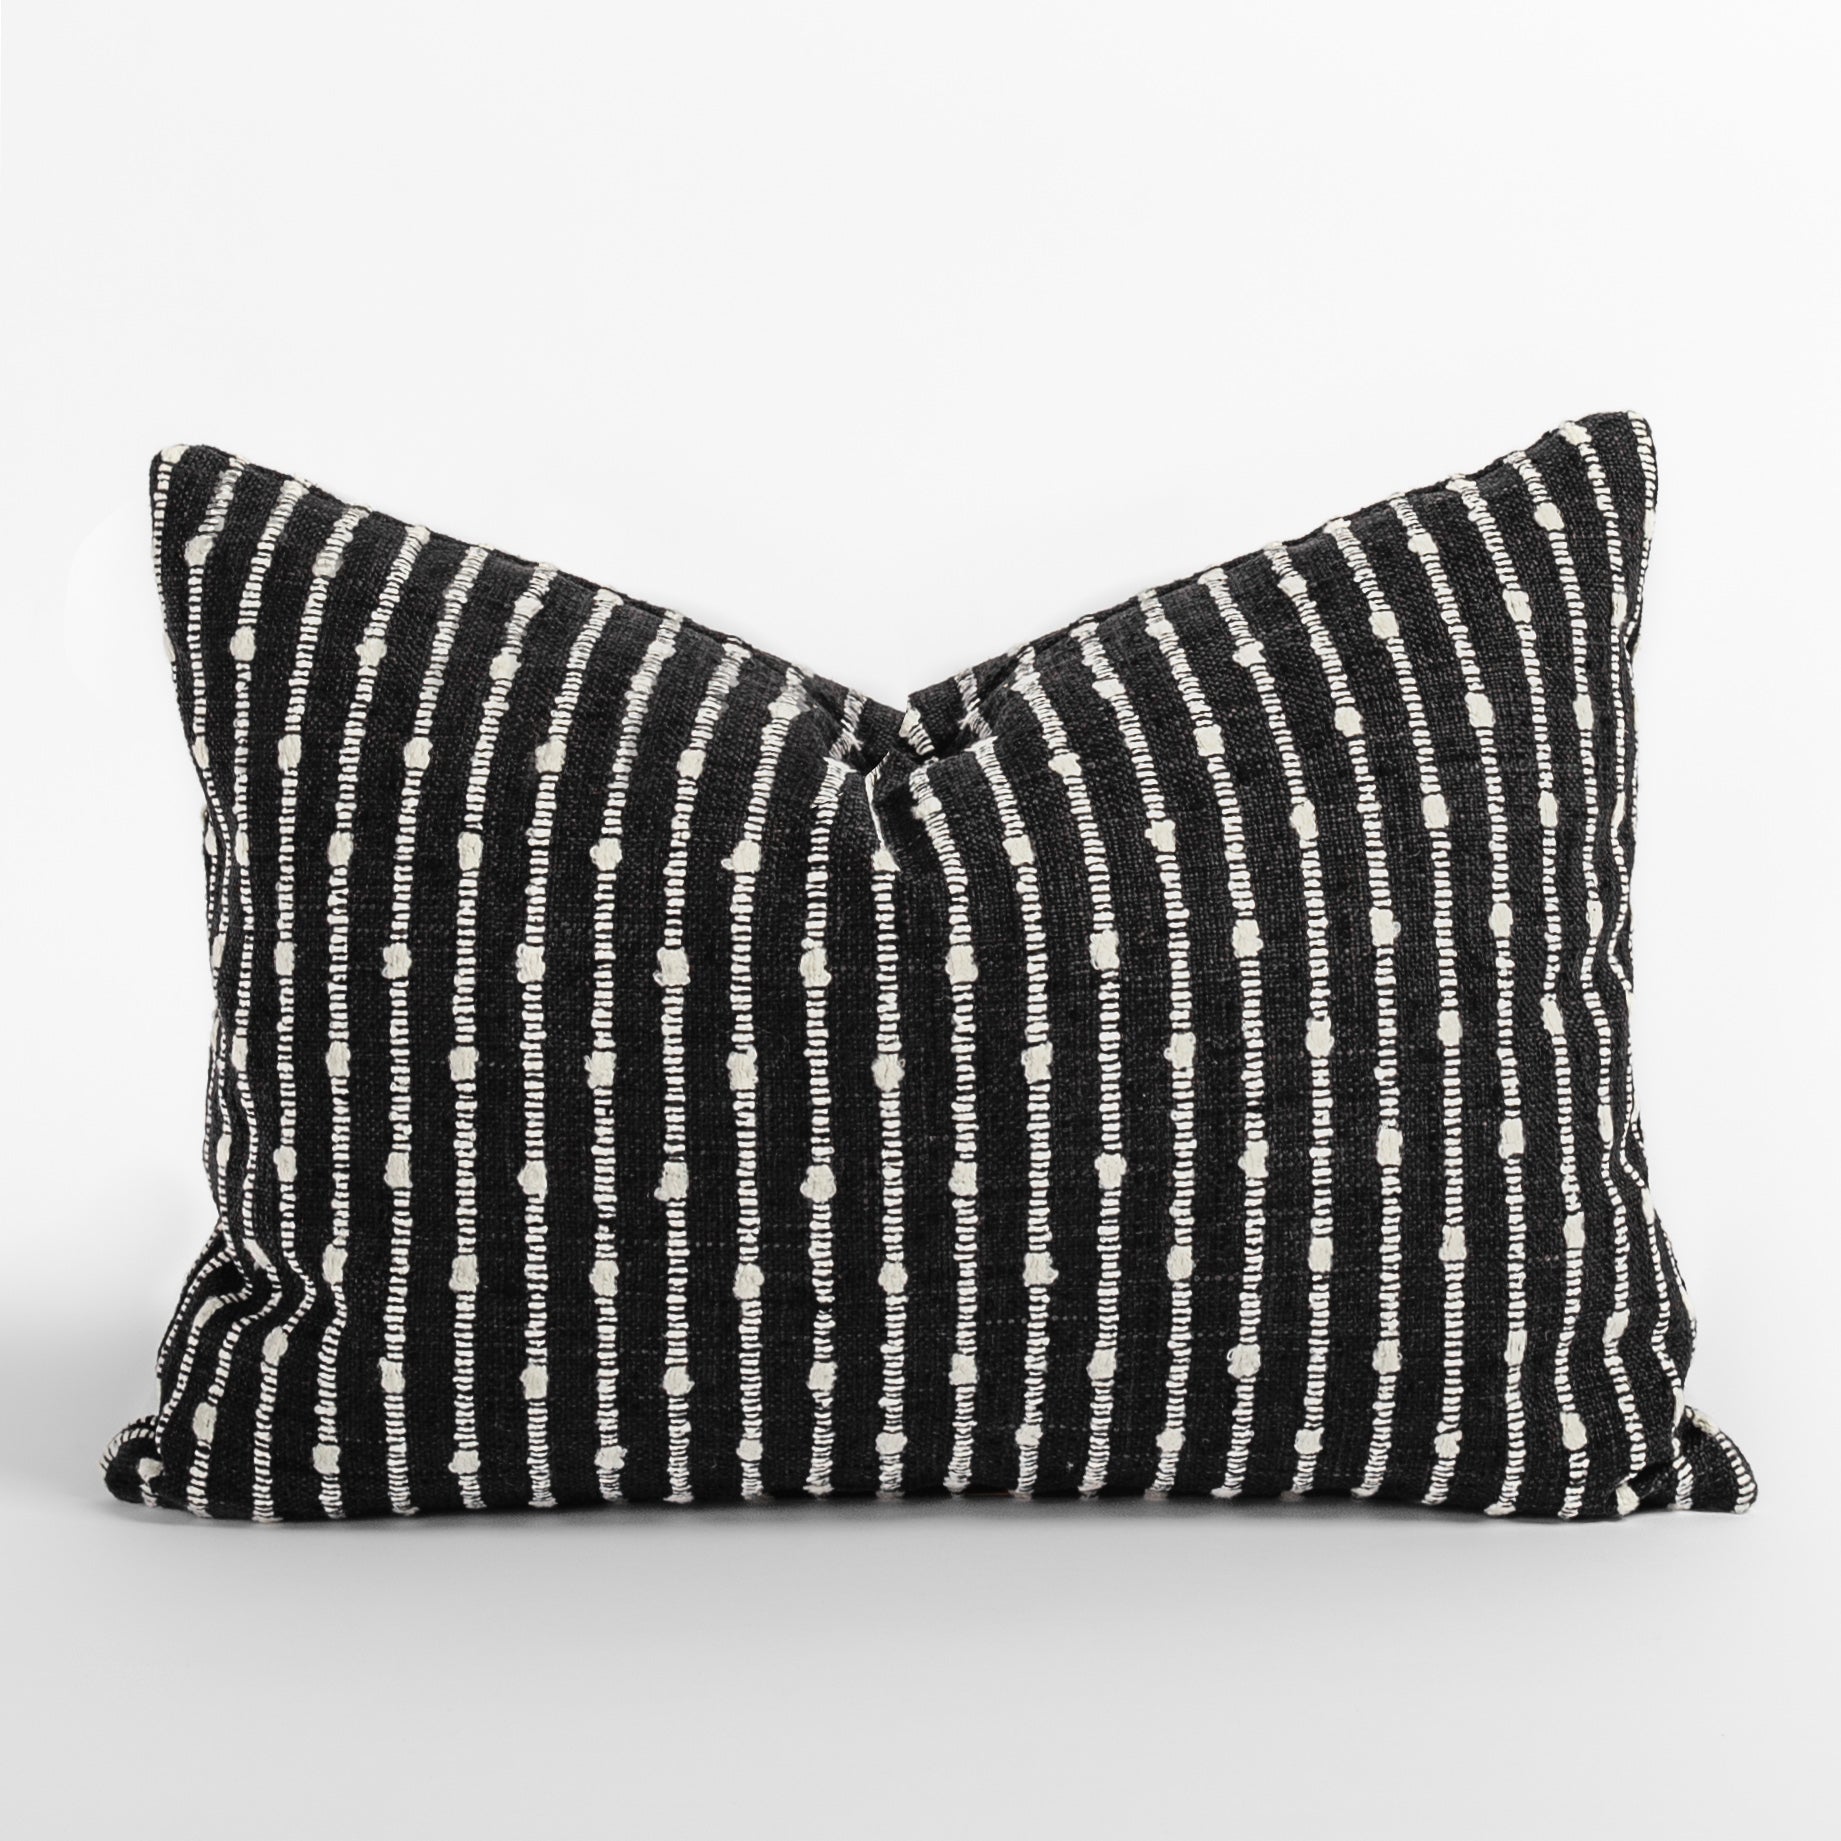 Arren stripe black and white lumbar pillow from Tonic Living